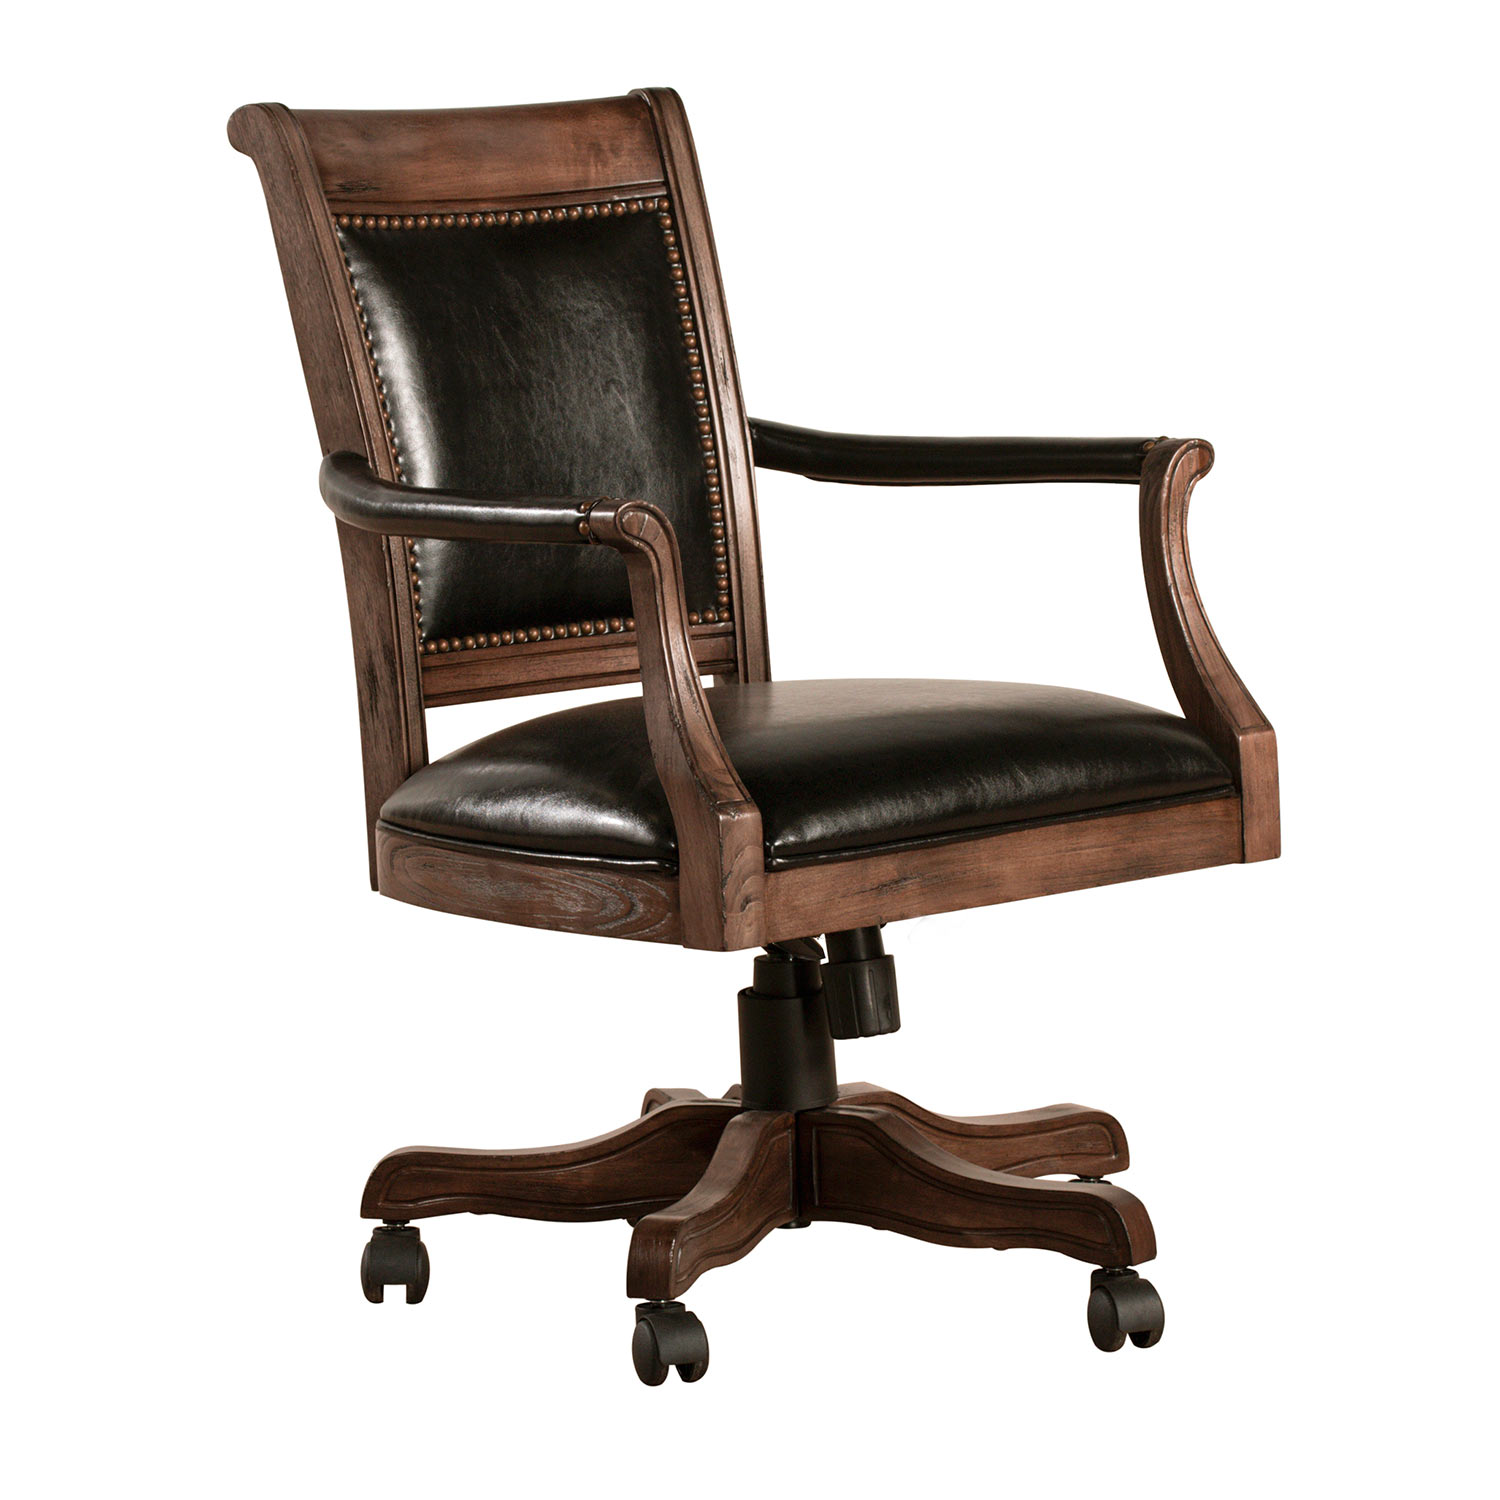 Hillsdale Kingston Freeport Wood Game/Desk Chair - Weathered Walnut